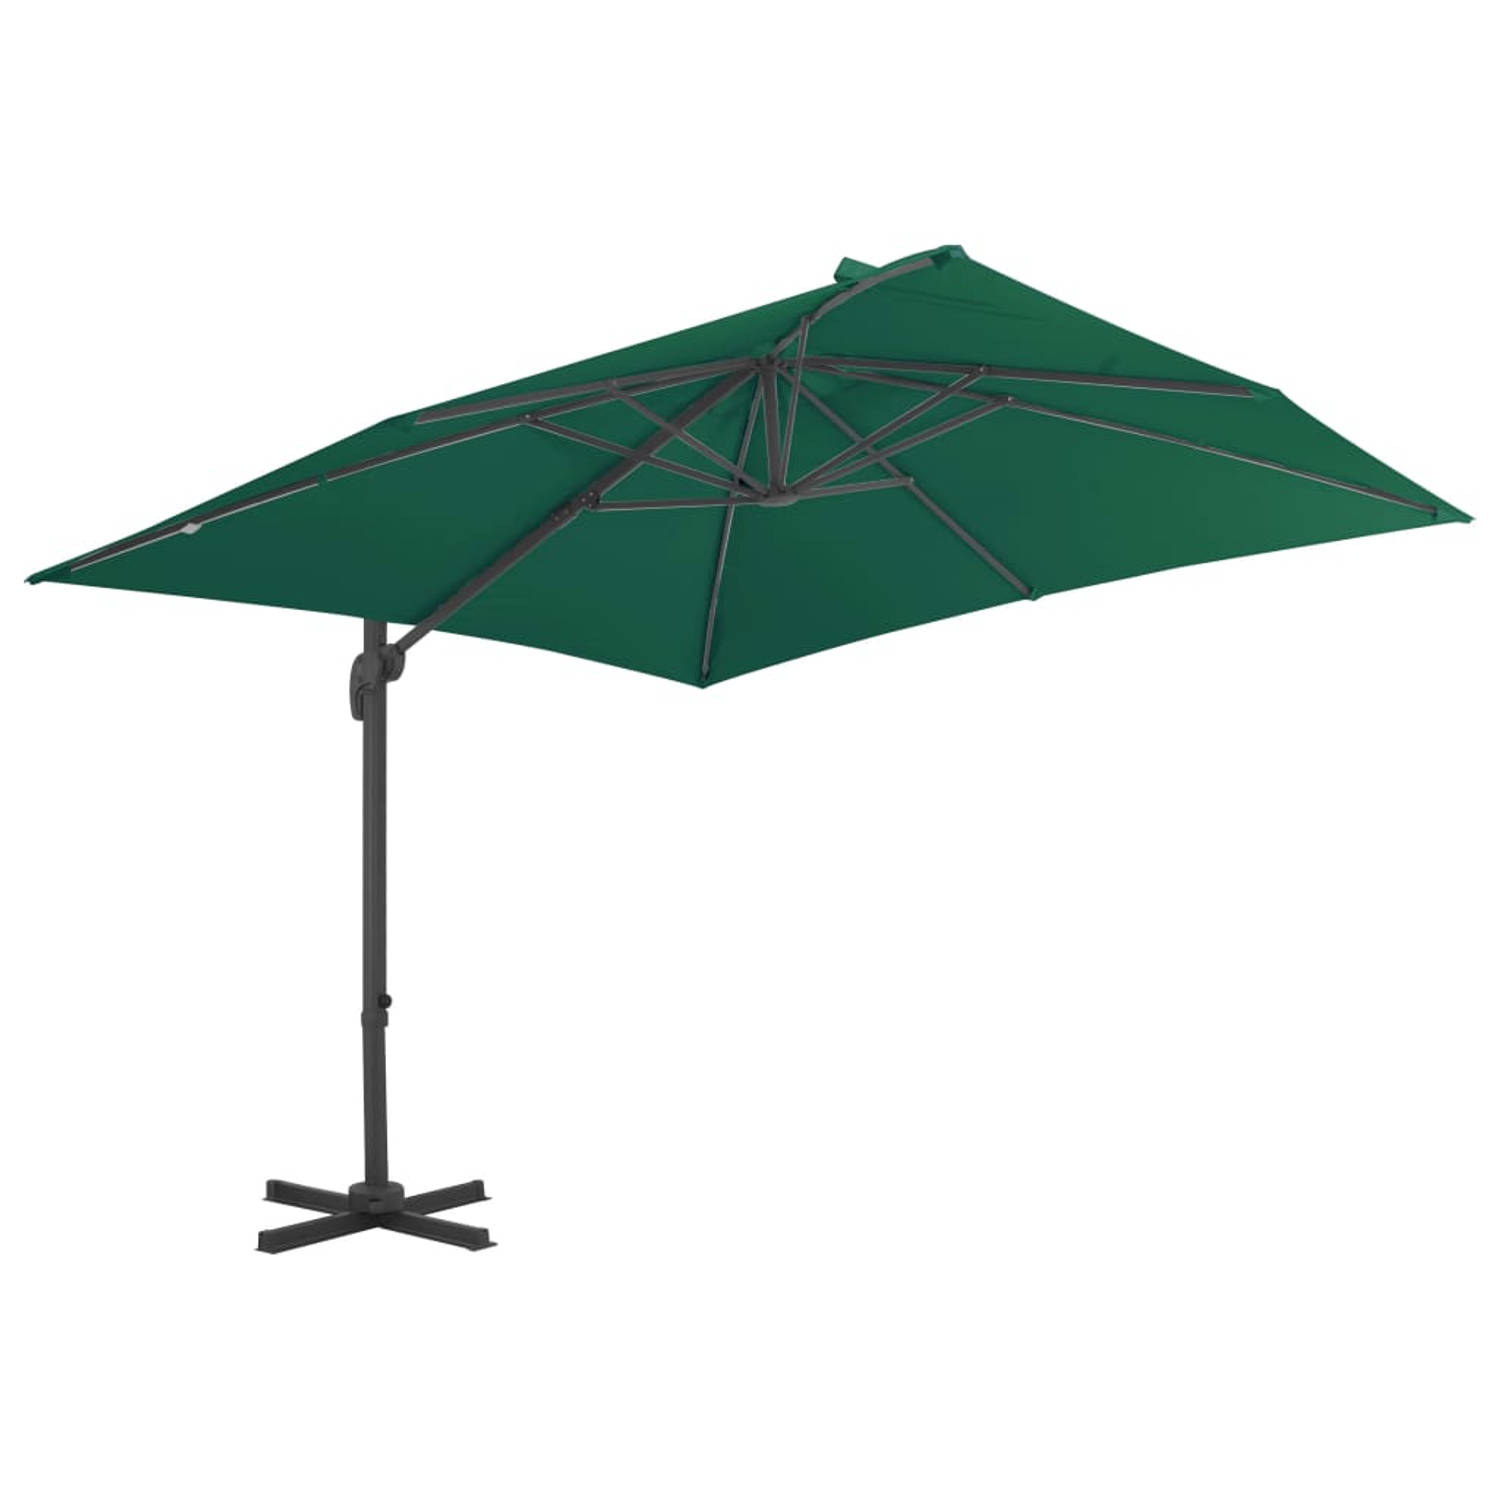 The Living Store Hangende Parasol Groen 300x300x258 cm - UV-beschermend en verstelbaar